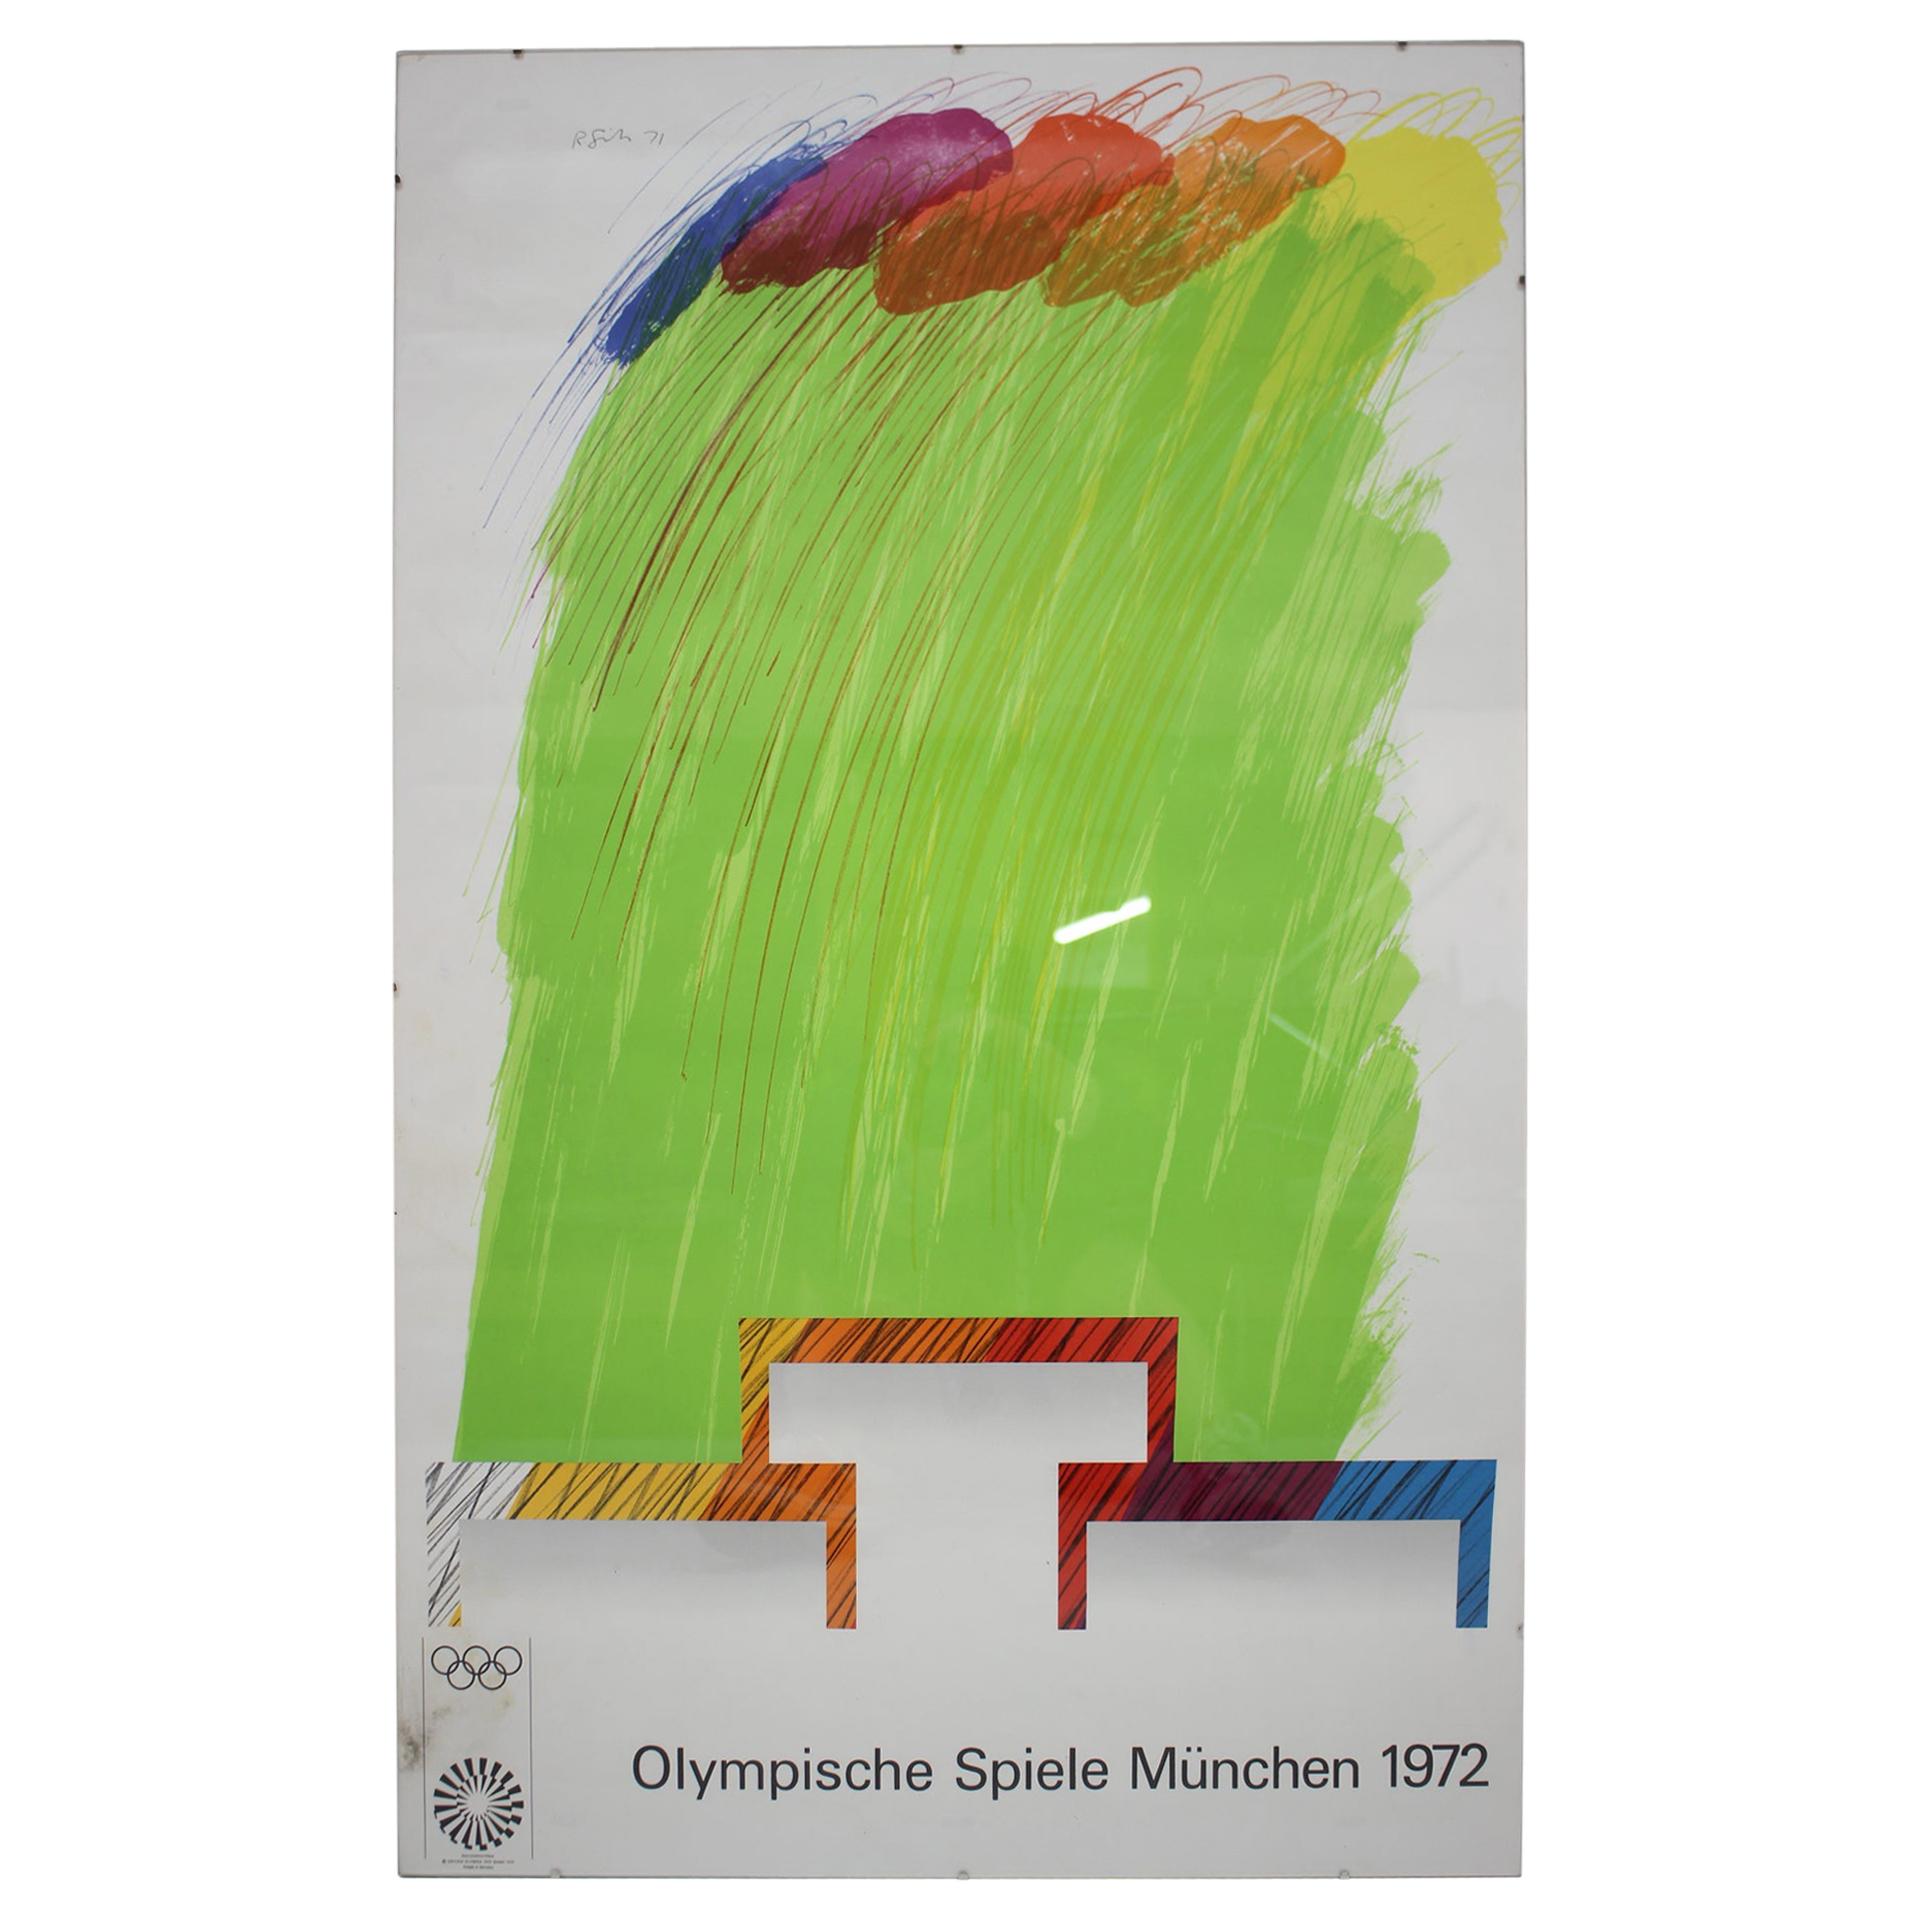 Olympic Games Munich 1972 Poster / Olympische Spiele München, by Richard Smith